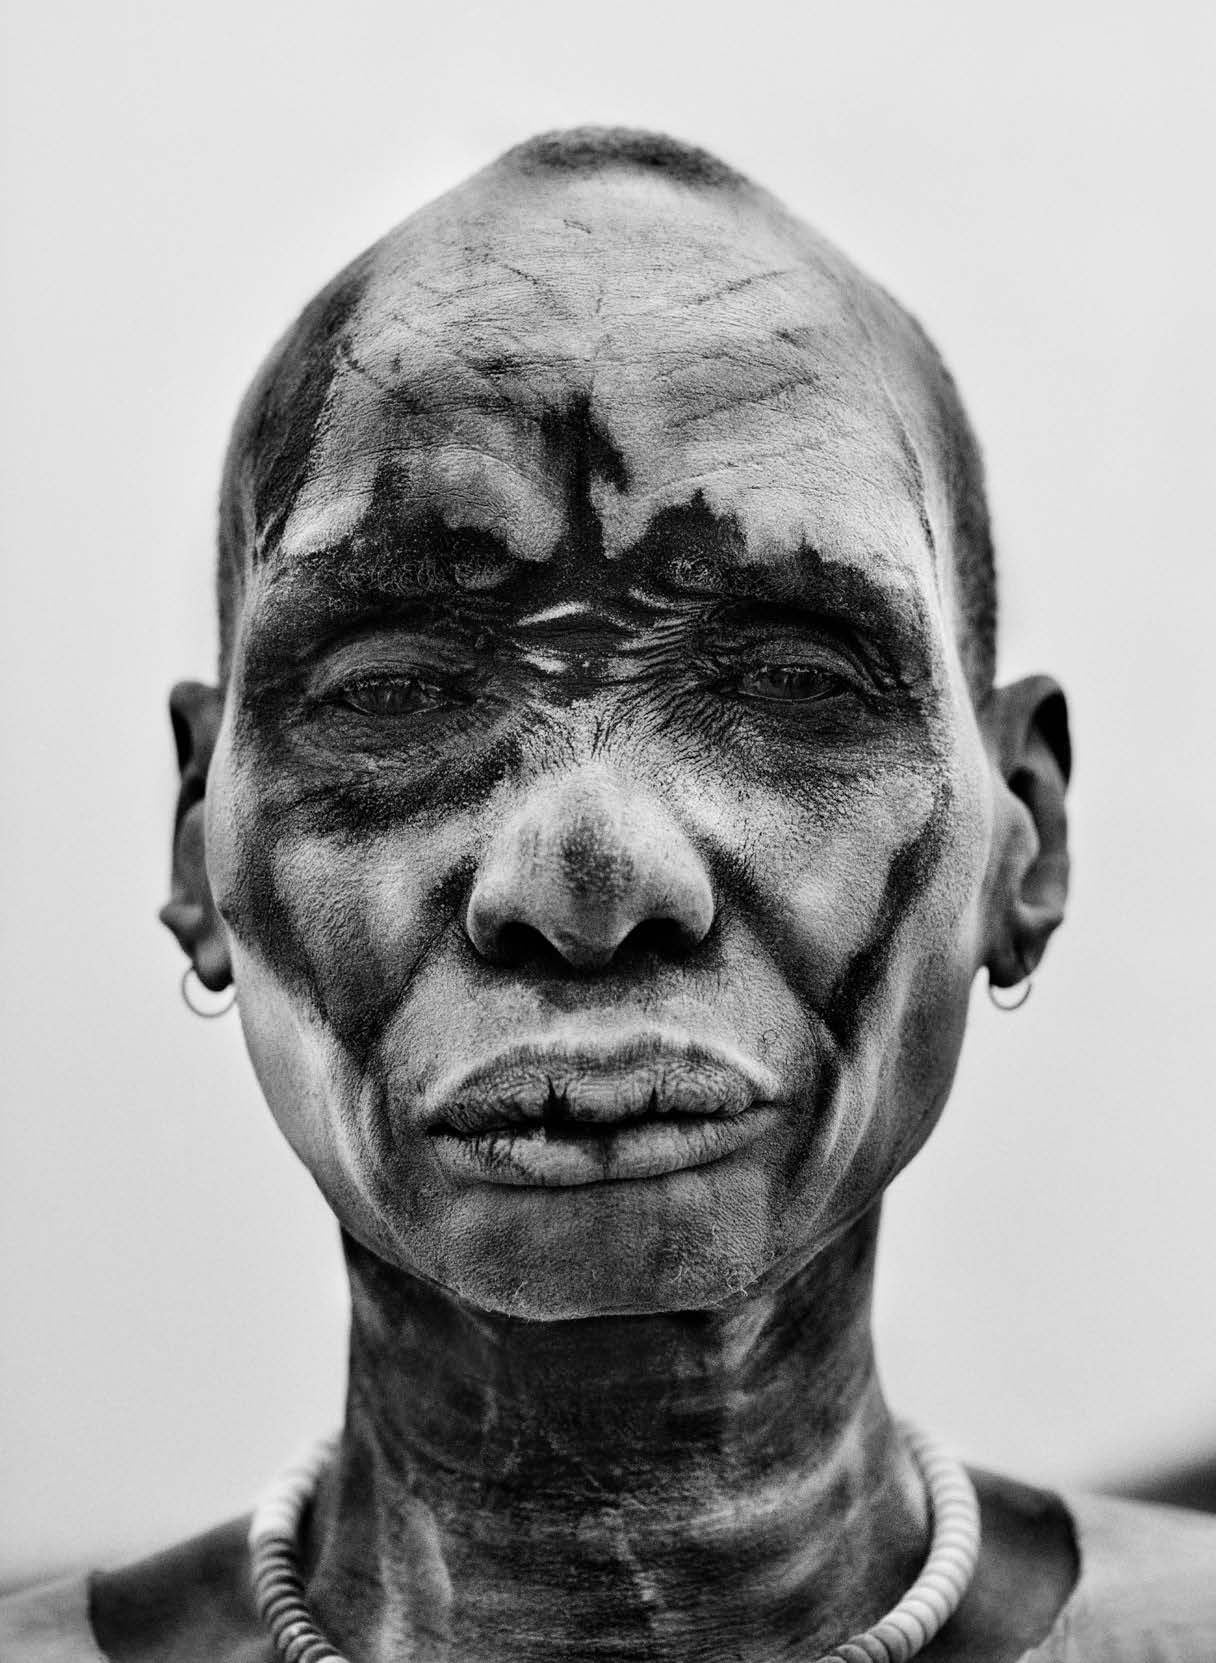 Dinka-Mann, Südsudan, 2006 
Sebastião Salgado
Gestempelt mit dem Copyright-Blindstempel des Fotografen
Signiert, rückseitig beschriftet
Silber-Gelatine-Druck
16 x 20 Zoll

Sebastião Salgado (geb. 1944) ist einer der berühmtesten Fotojournalisten der